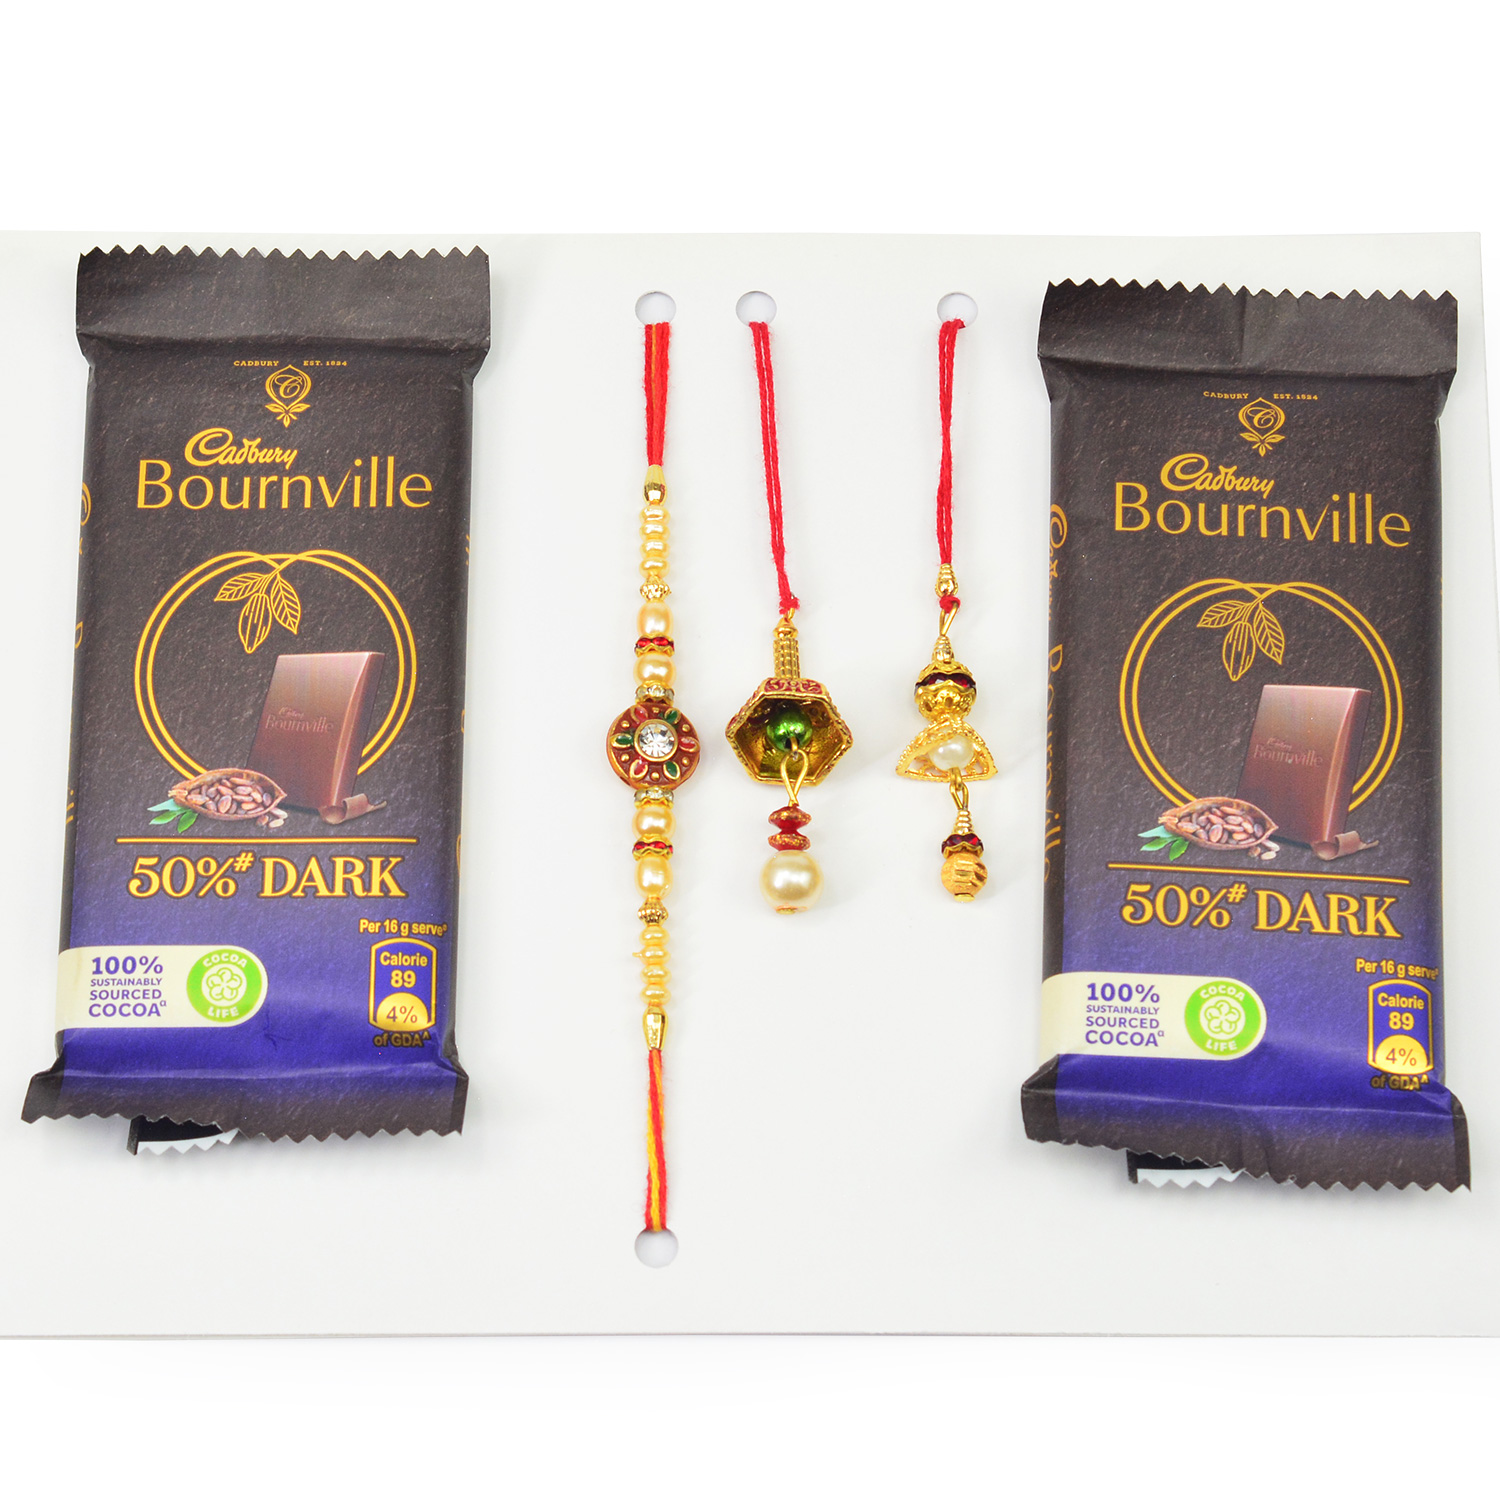 Cadbury Bournville 2 Pack of Chocolates with 2 Lumba and One Brother Rakhis Set